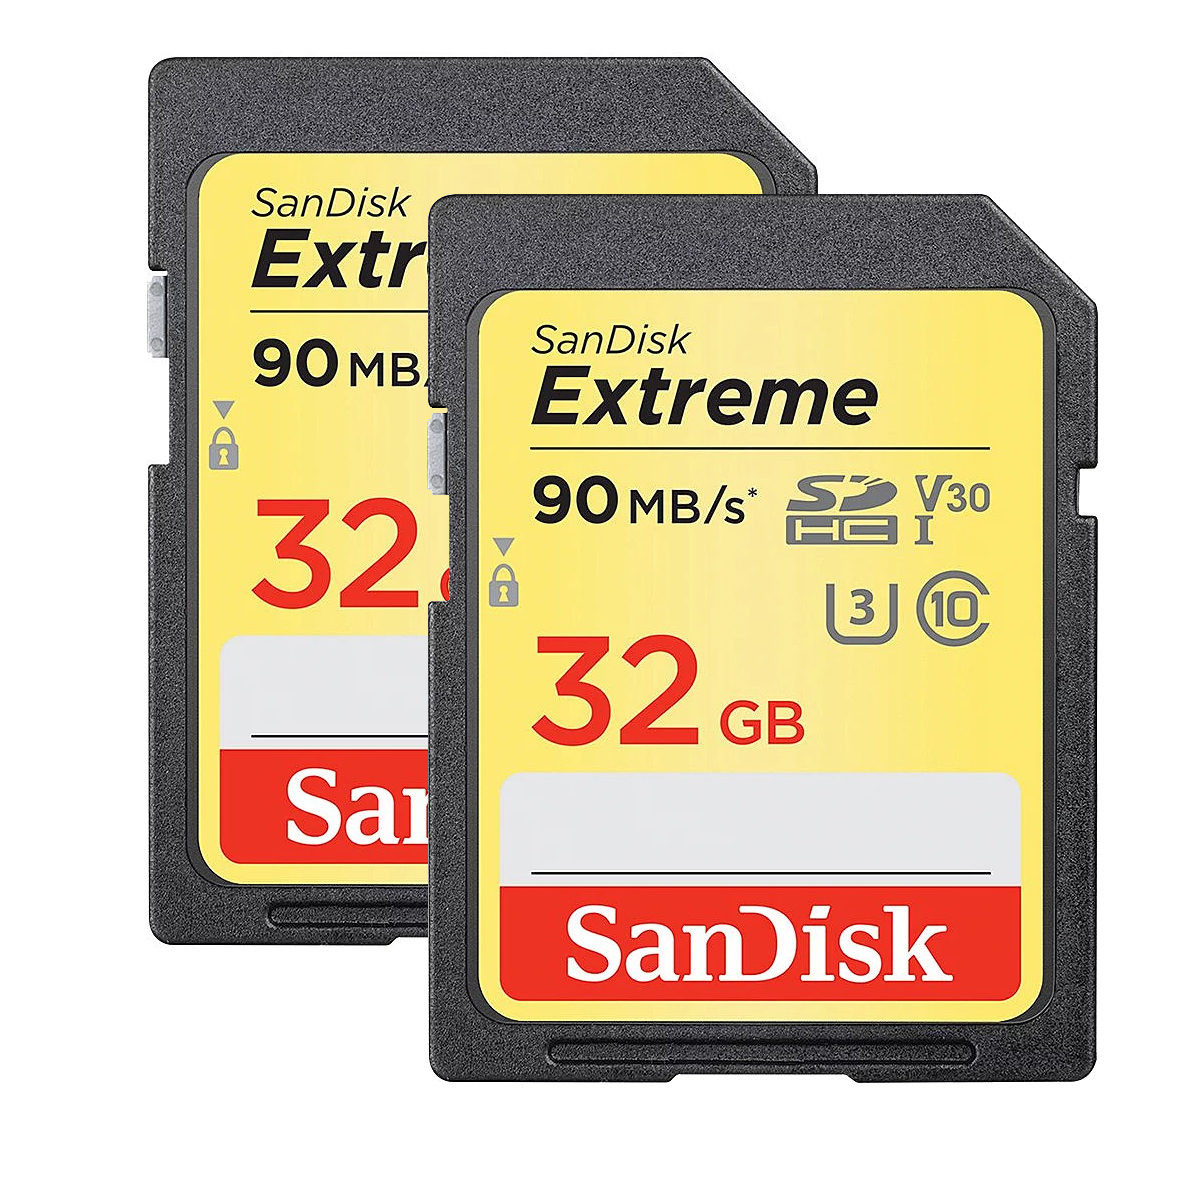 SanDisk 32GB SDHC Extreme UHS-I U3 90MB/s V30 geheugenkaart - 2 stuks